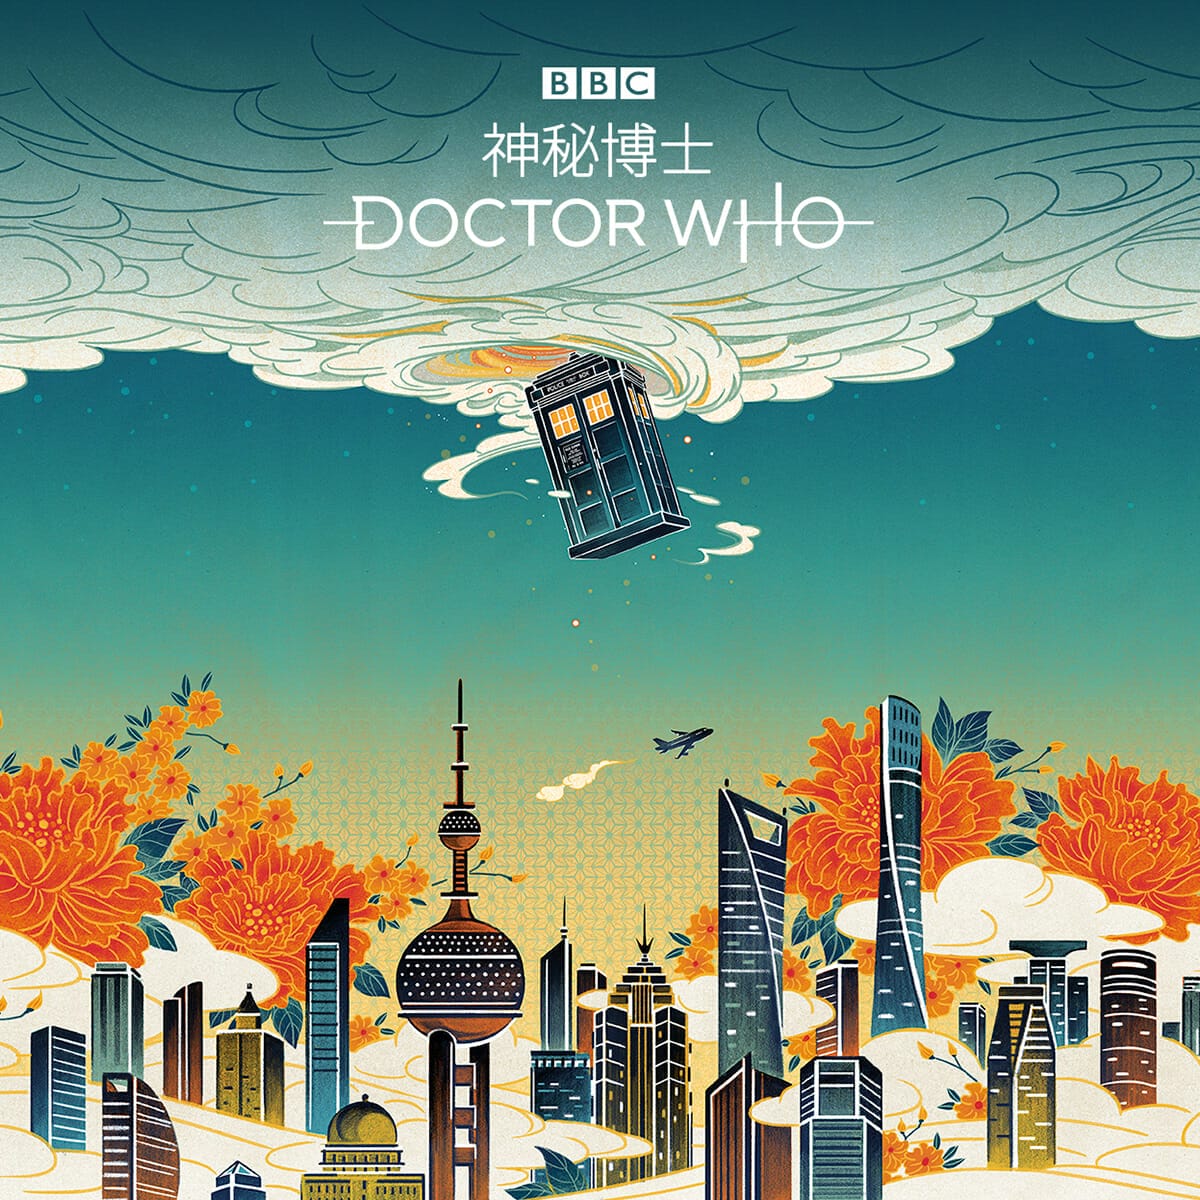 Doctor Who in China by Feifei Ruan 